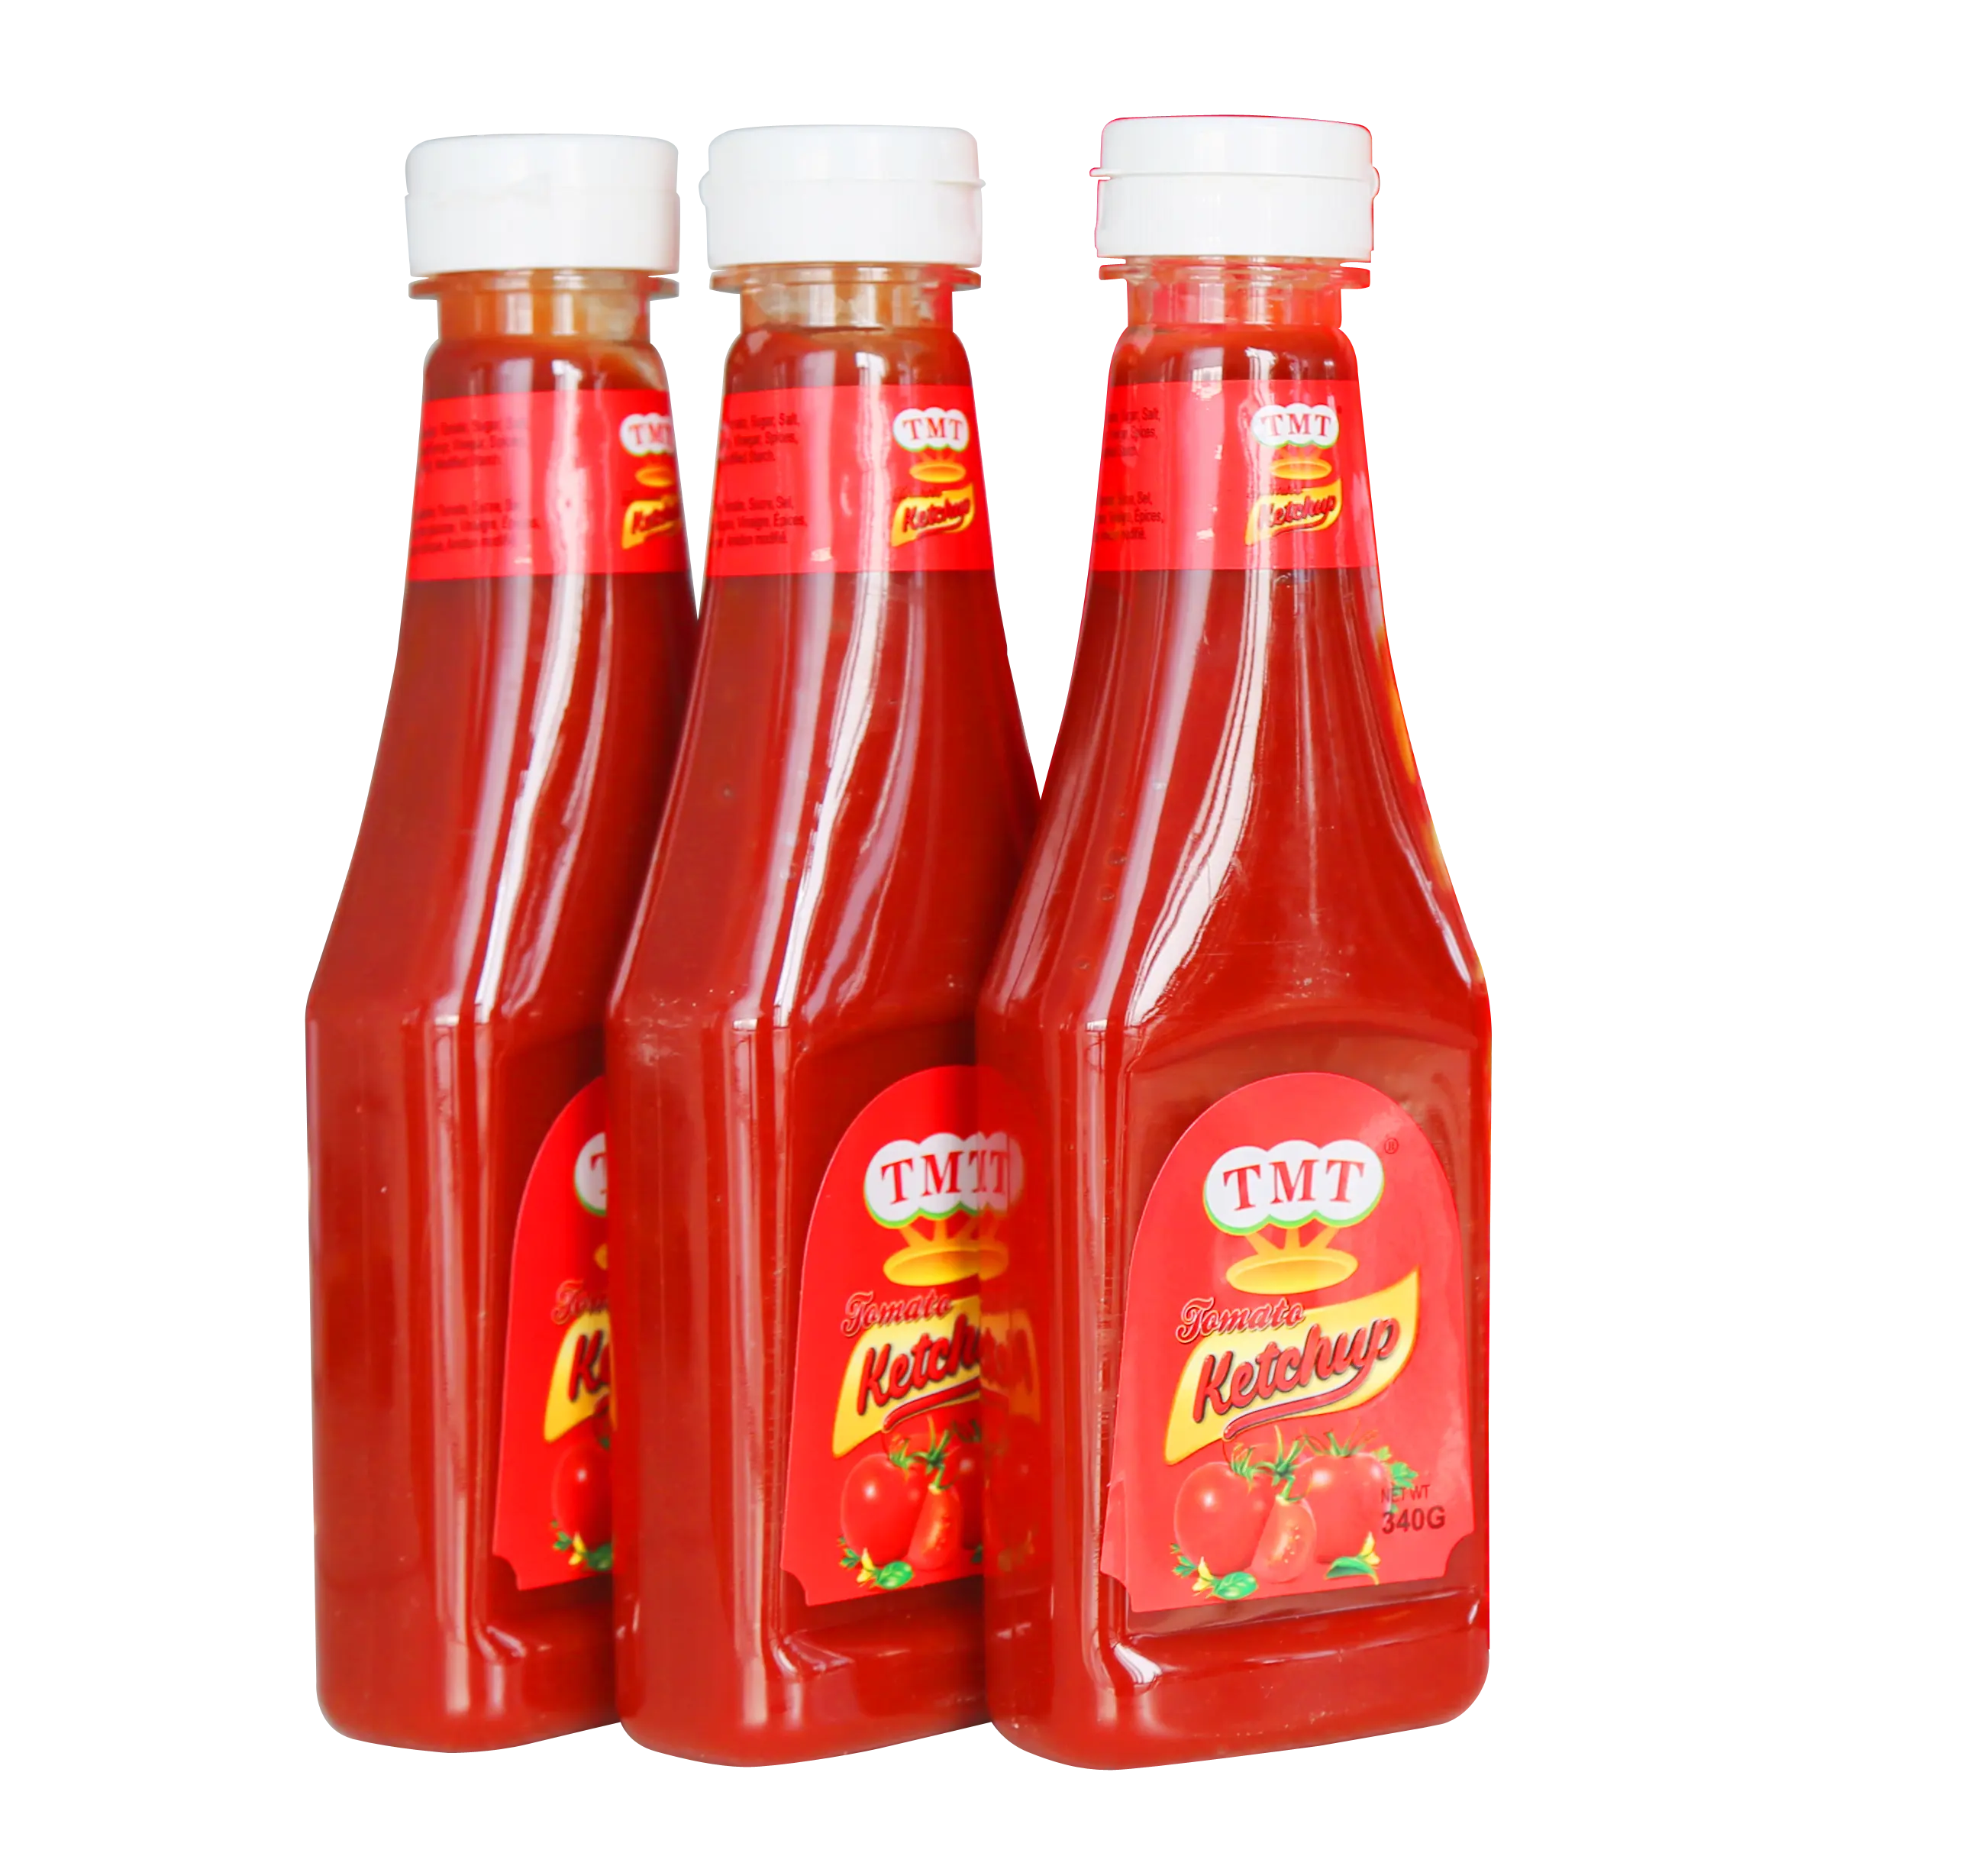 Produzione di salsa di condimento per cottura lattine di ketchup fresche 340g bottiglie di ketchup